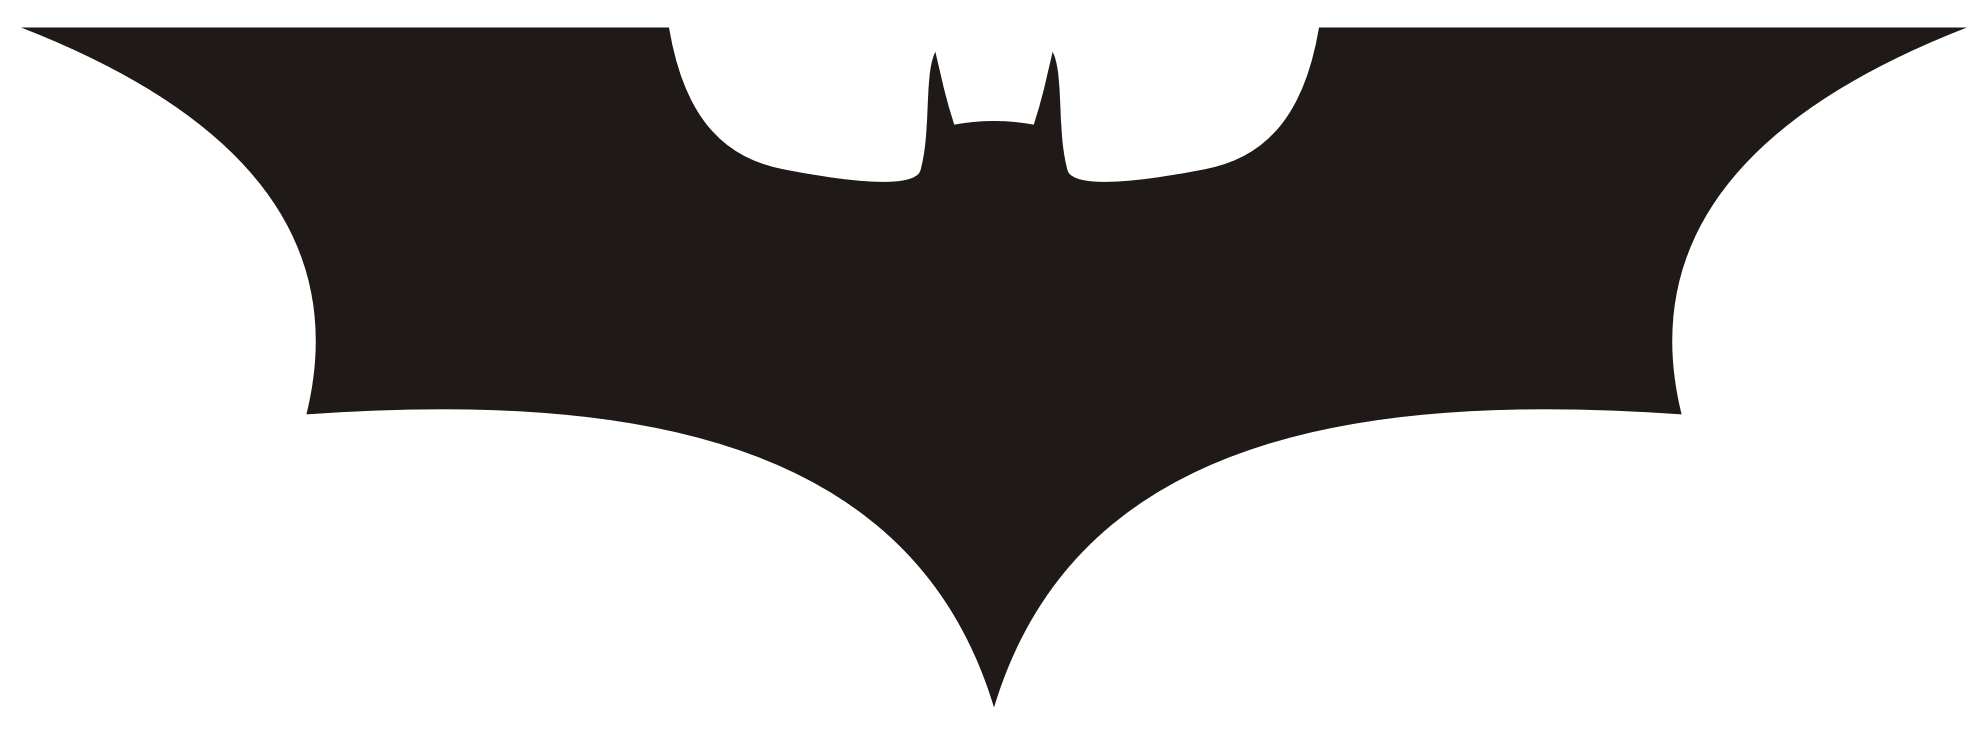 batman emblem printable free printable batman logo bing images crafts emblem printable batman 